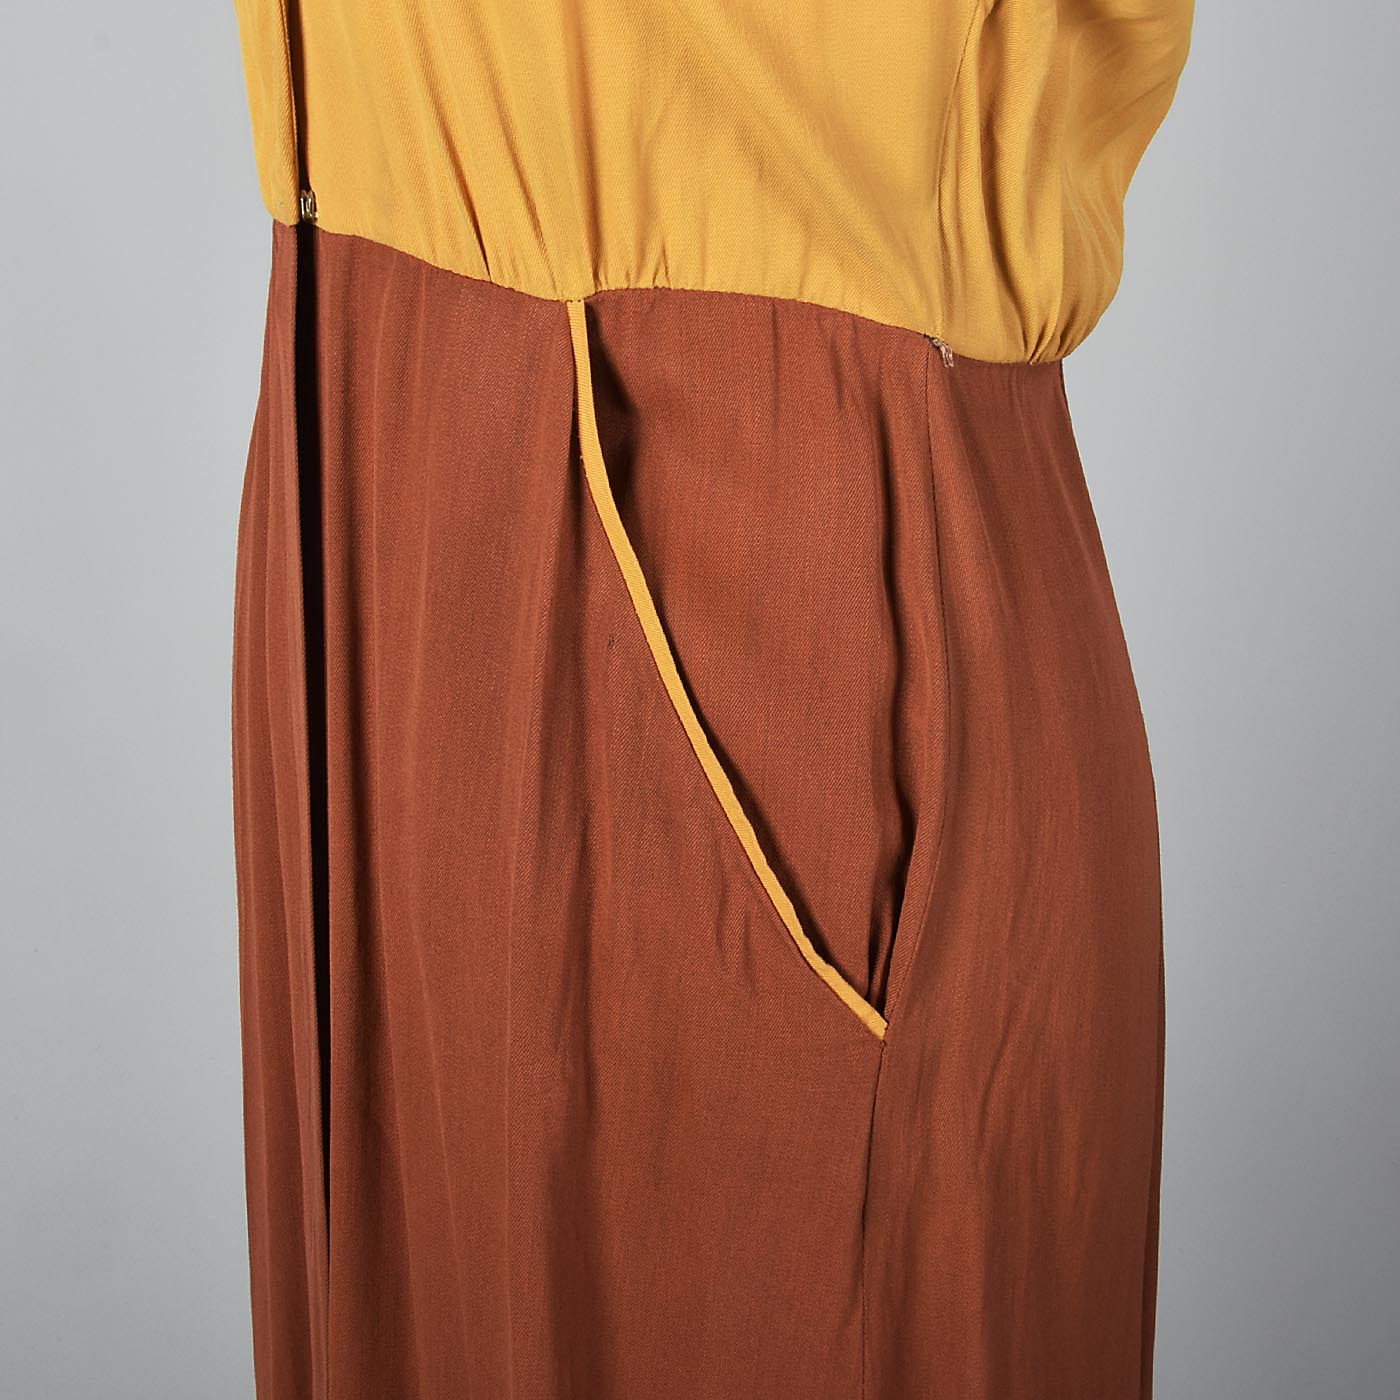 1950s Yellow and Brown Gaberdine Day Dress